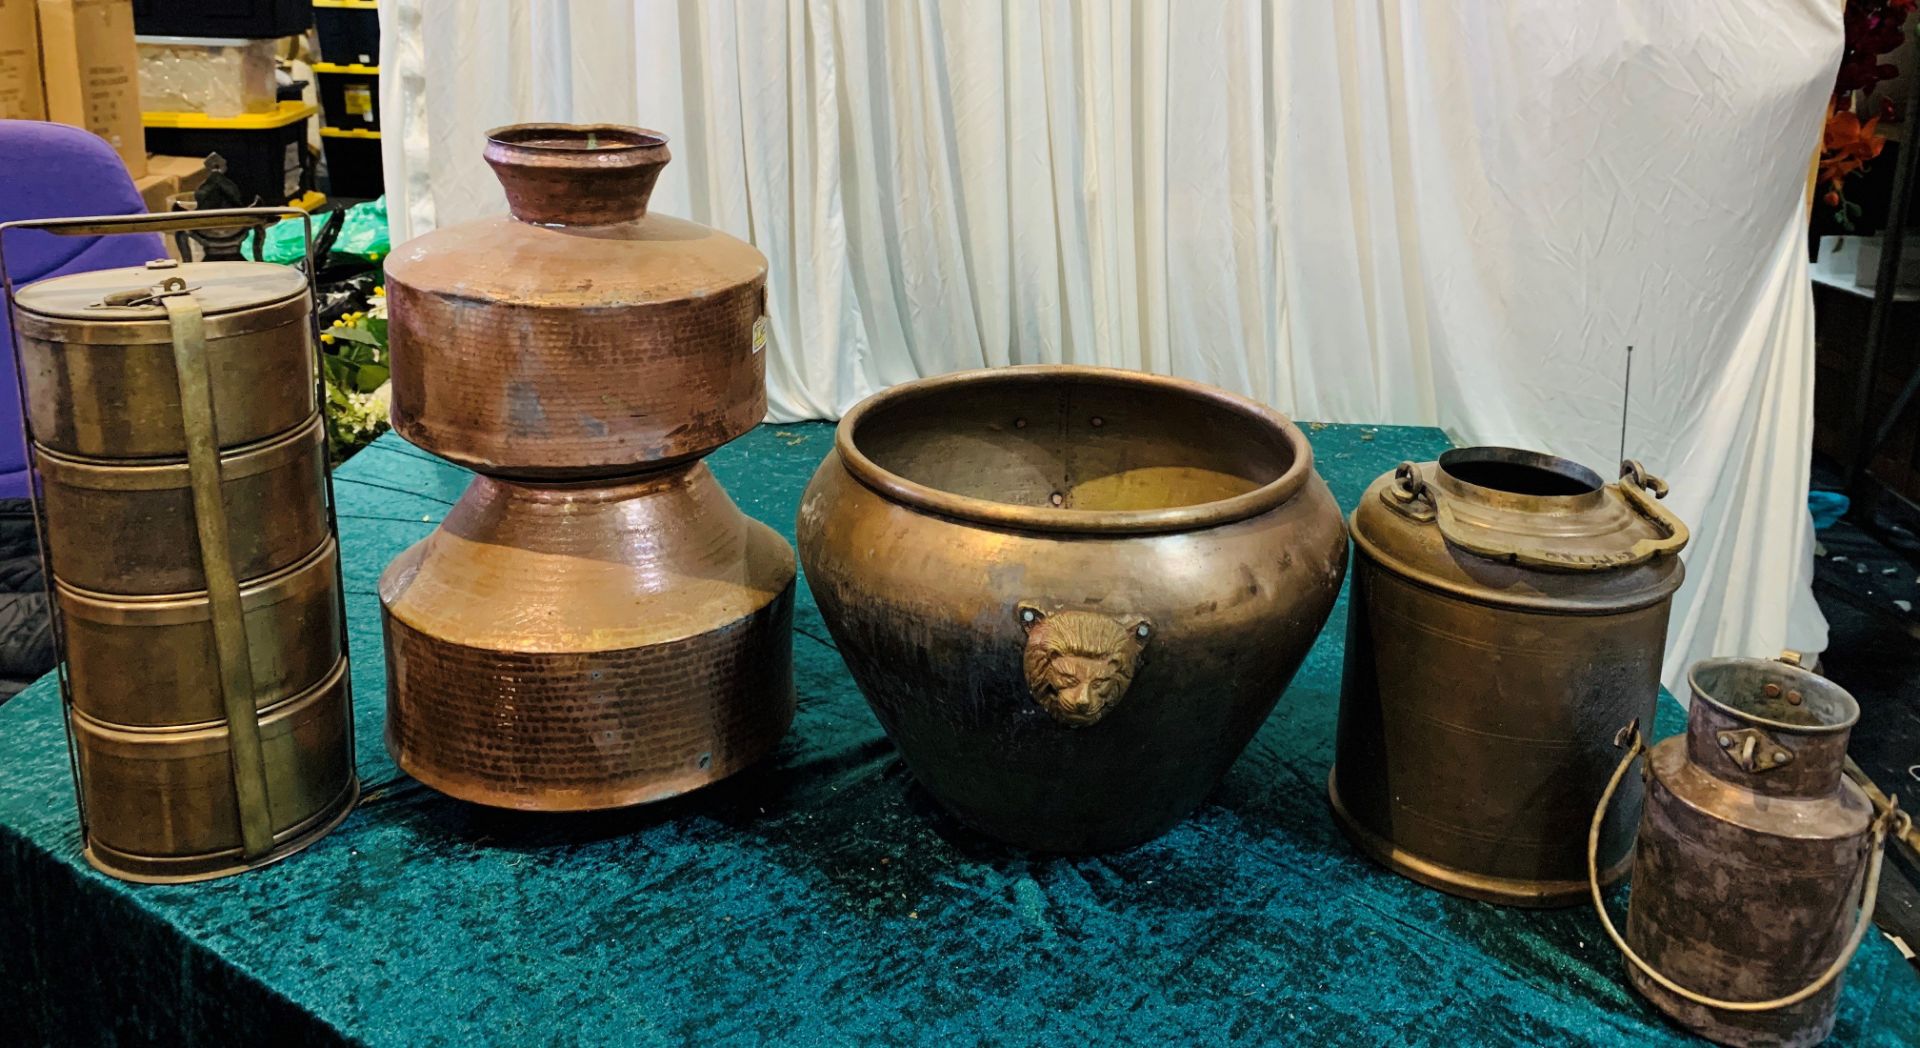 5 x Assorted Metal Indian Pots - Dimensions: Mixed - Ref: Lot 89 - CL548 - Location: Near Market